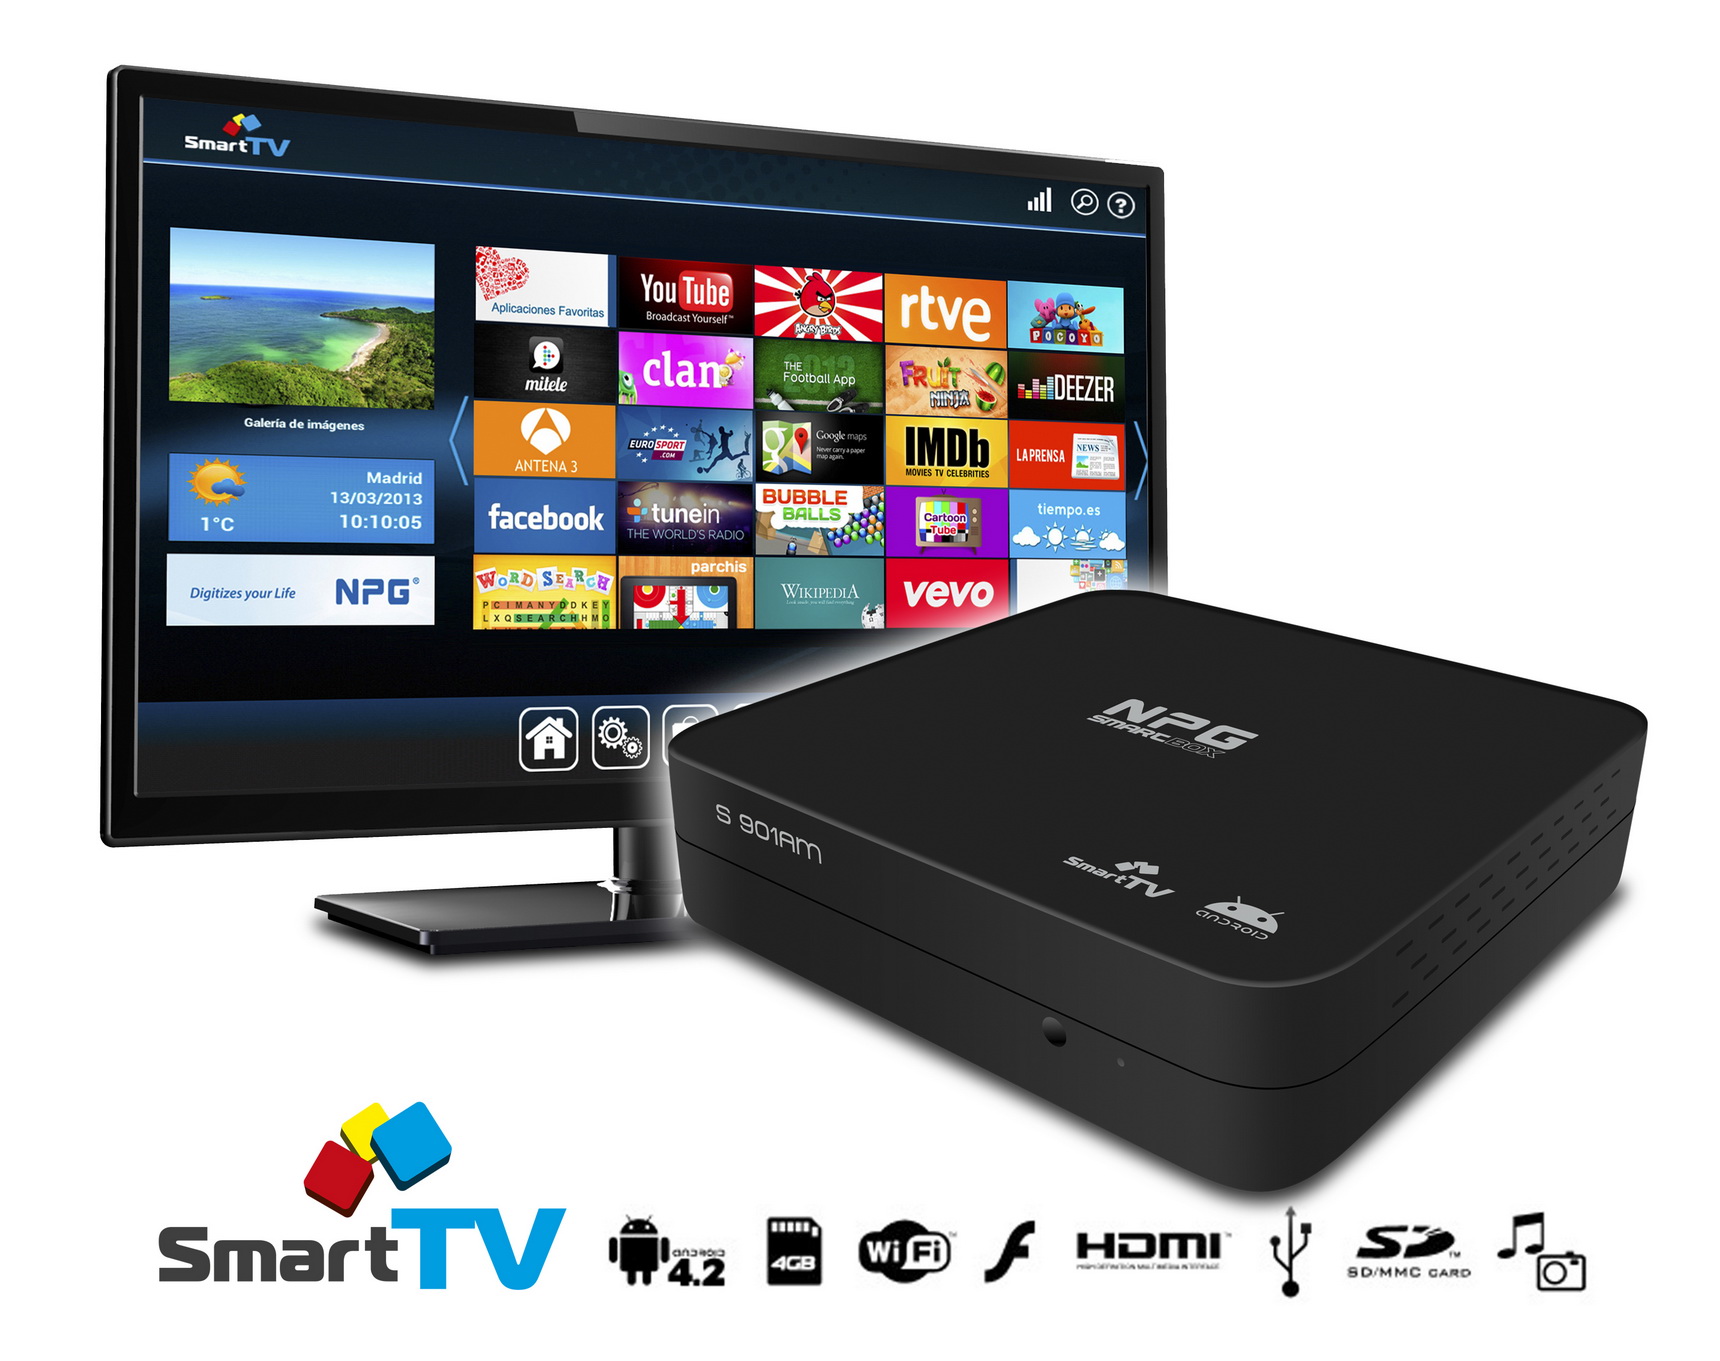 Nuevo dispositivo para NPG Smart Tv: Smart Box S-901AM - Mundo Digital